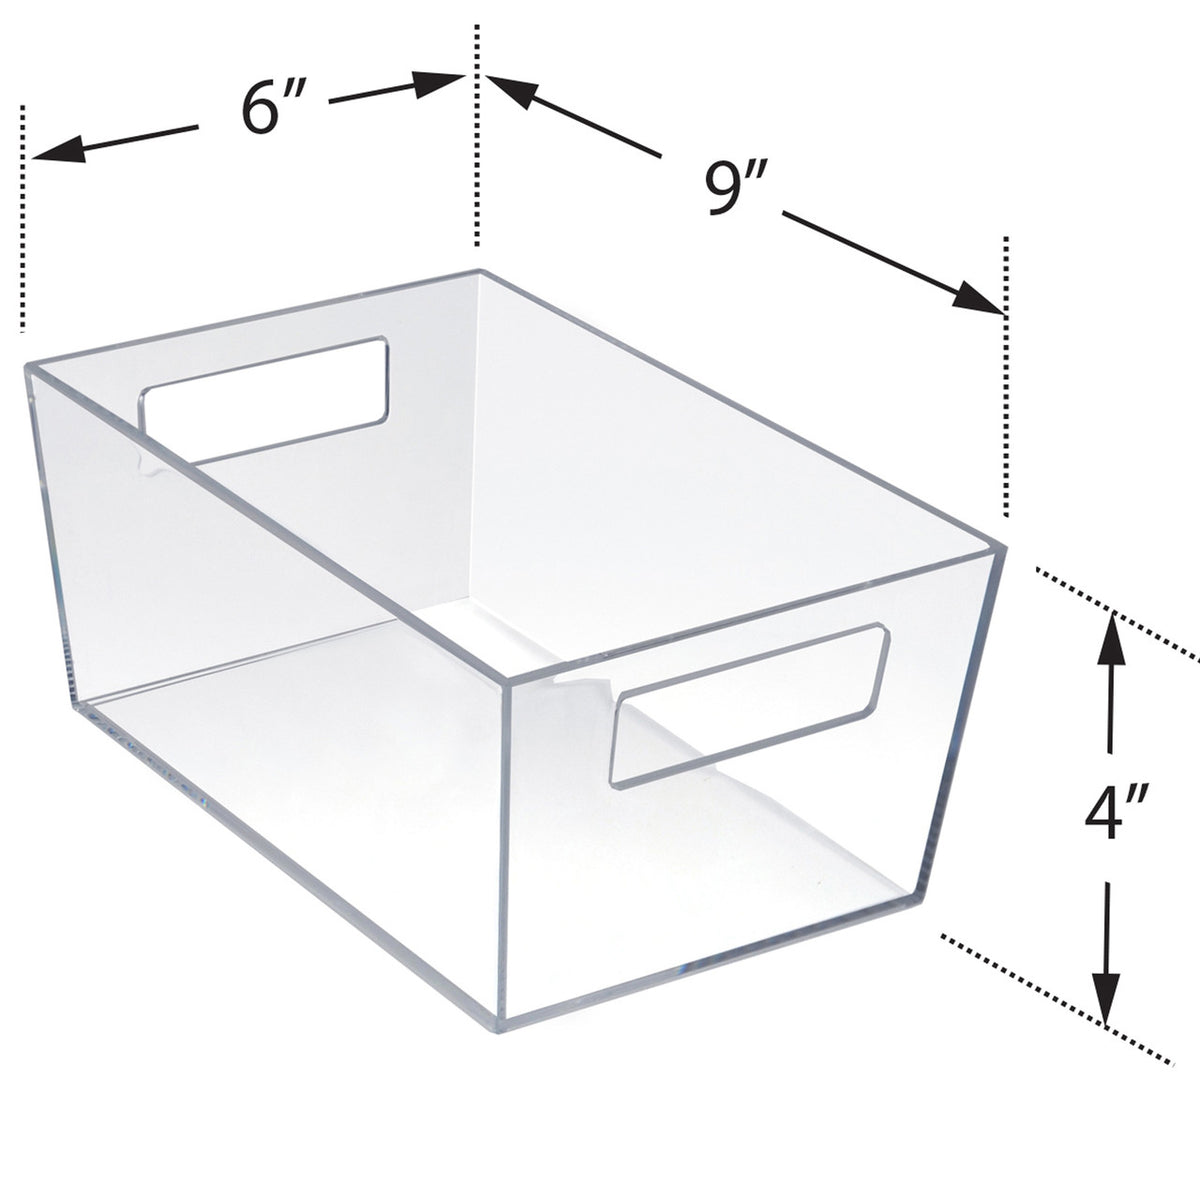 Small Organizer Storage Tote Bin with Handle 9W x 6D x 4H, 4-Pack –  DANONI